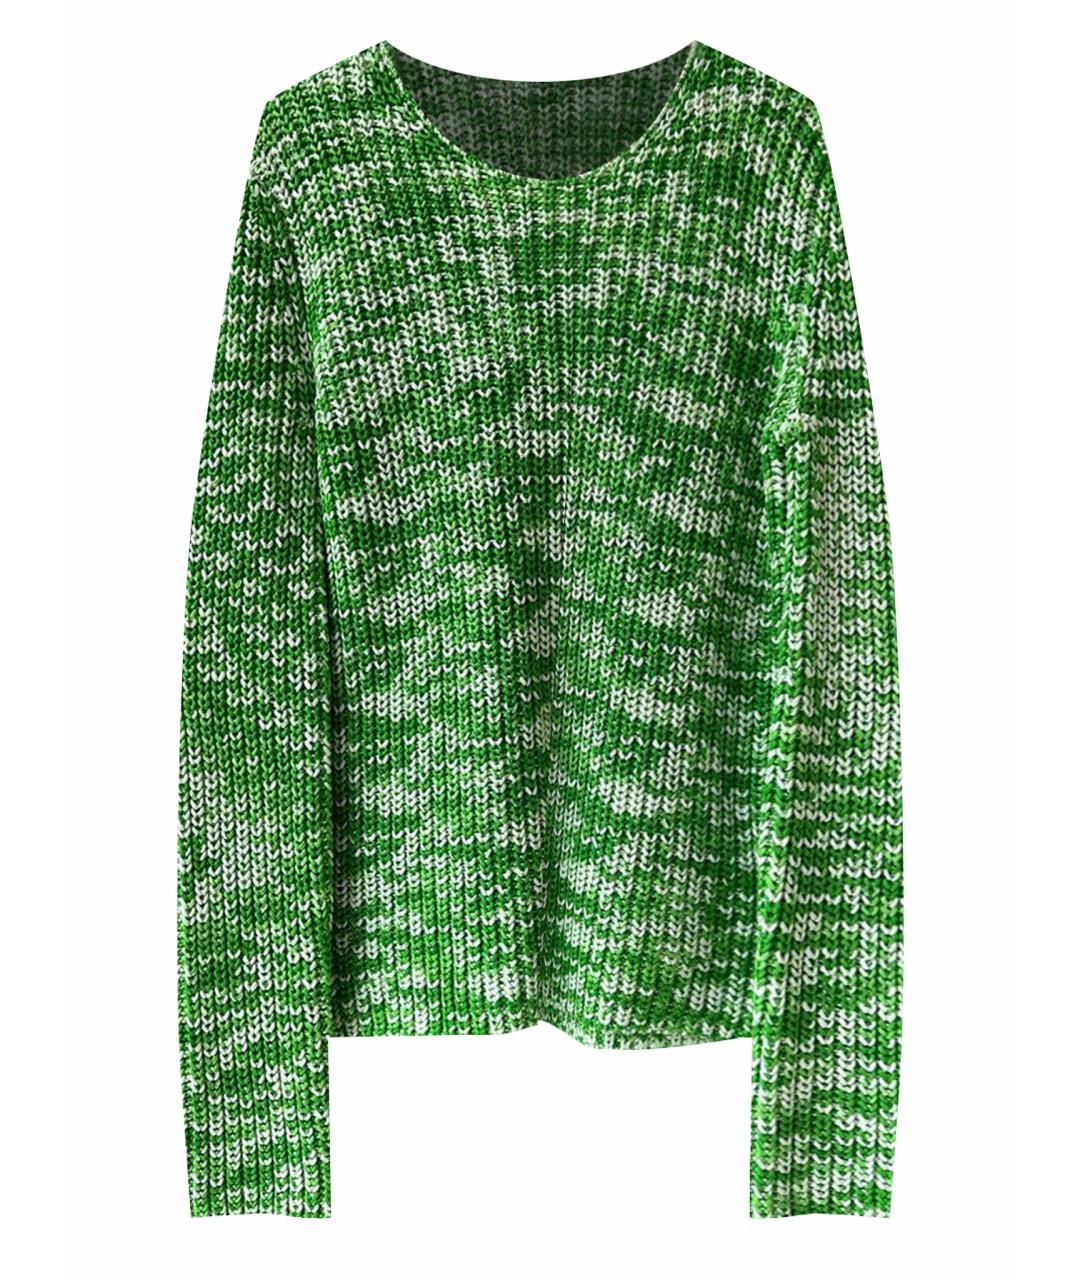 CELINE PRE-OWNED Зеленый хлопковый джемпер / свитер, фото 1